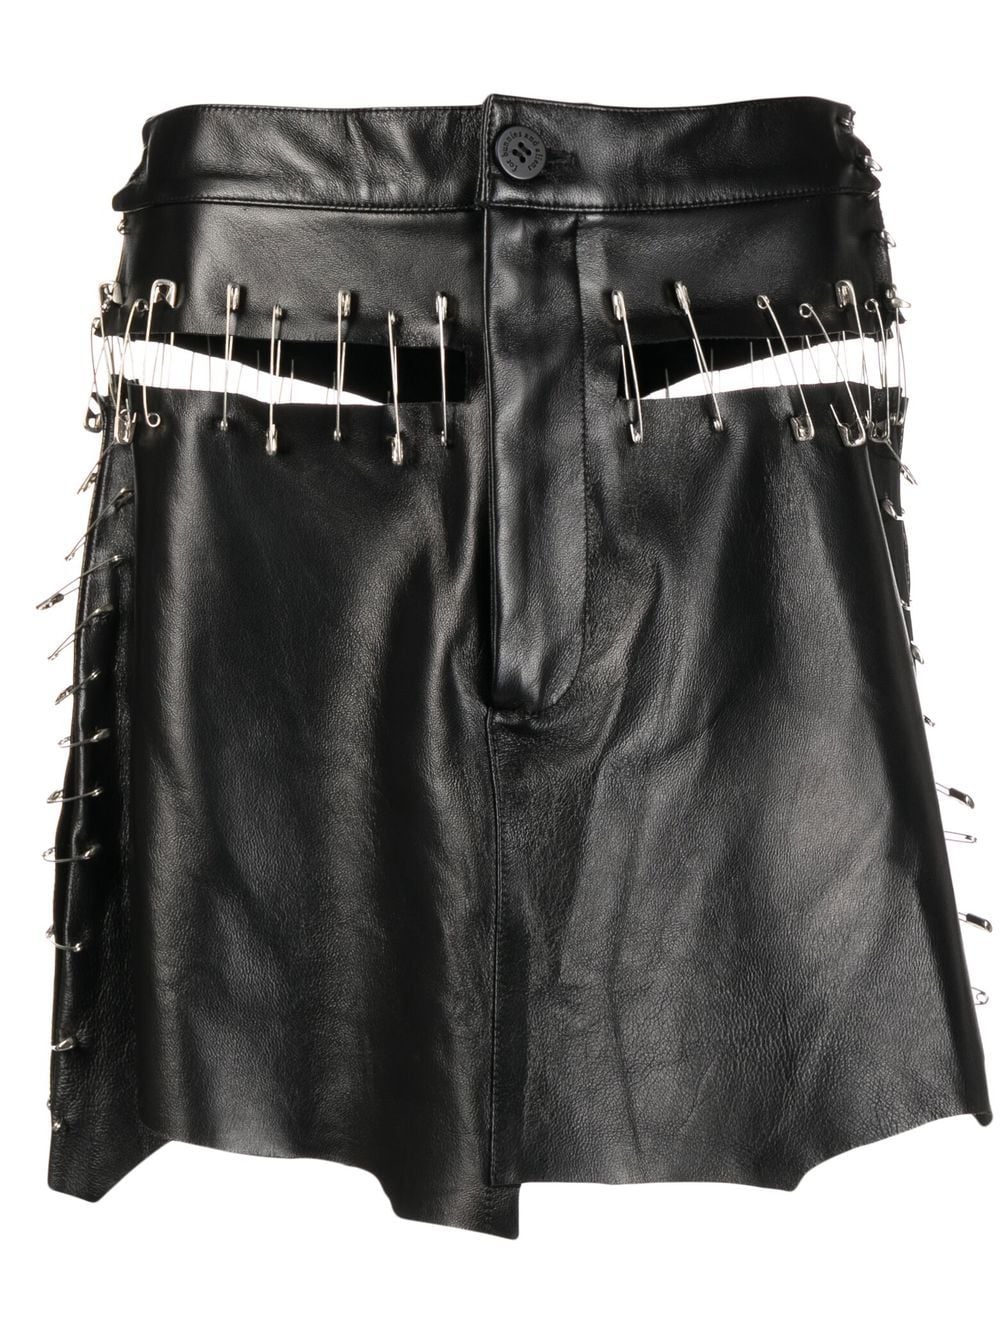 Natasha Zinko safety-pin detail leather skirt - Black von Natasha Zinko